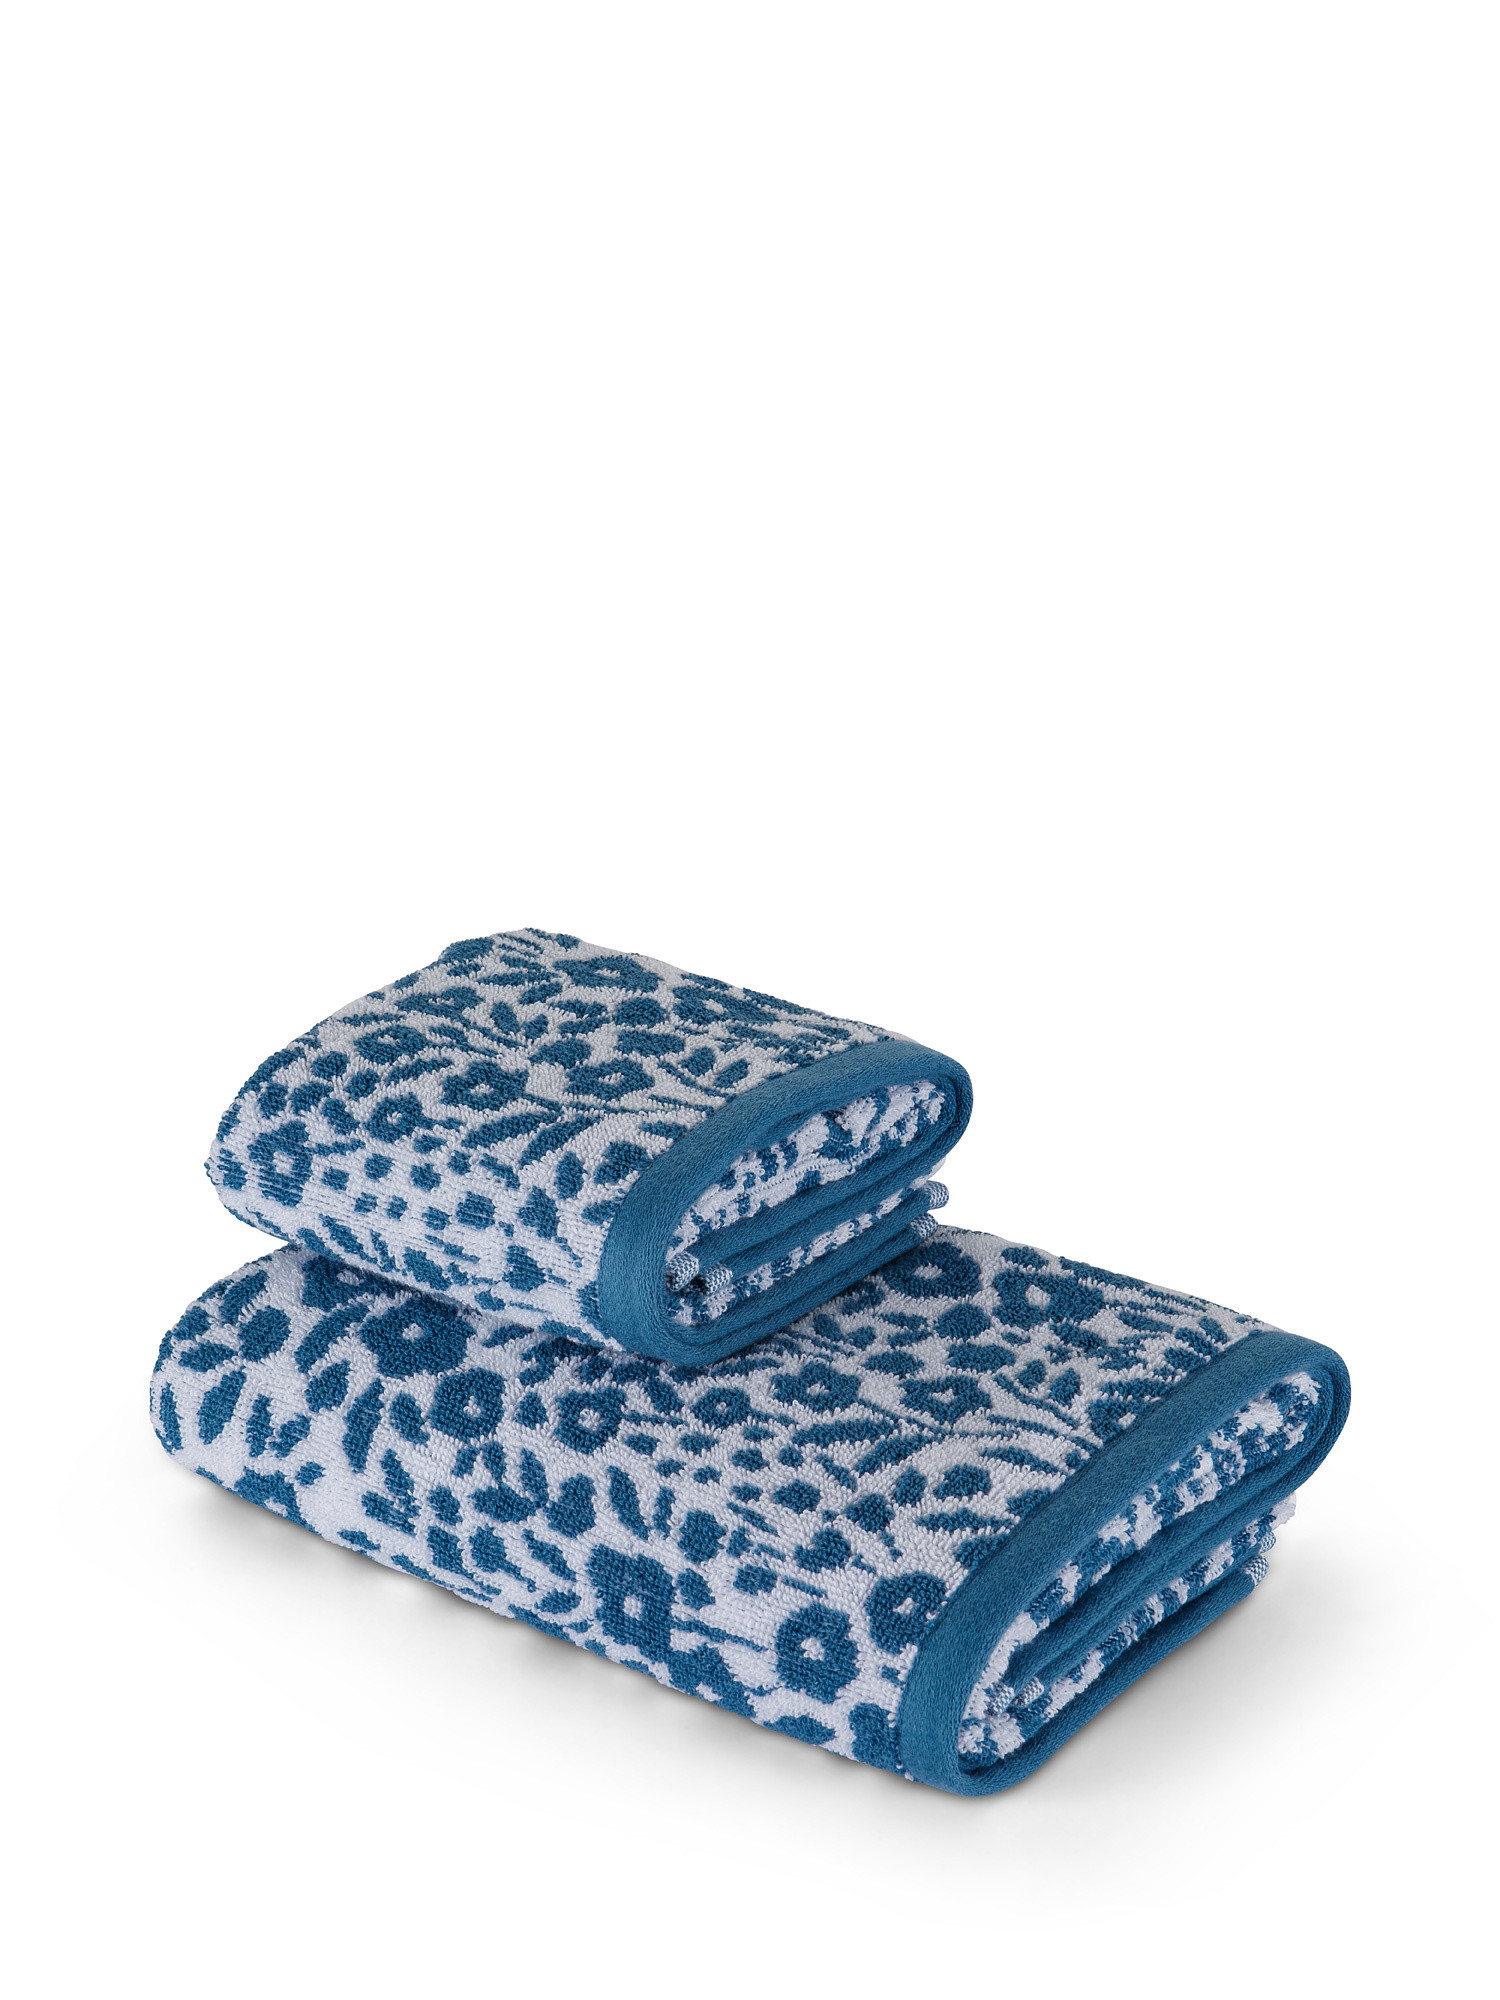 Asciugamano cotone jacquard motivo floreale, Blu, large